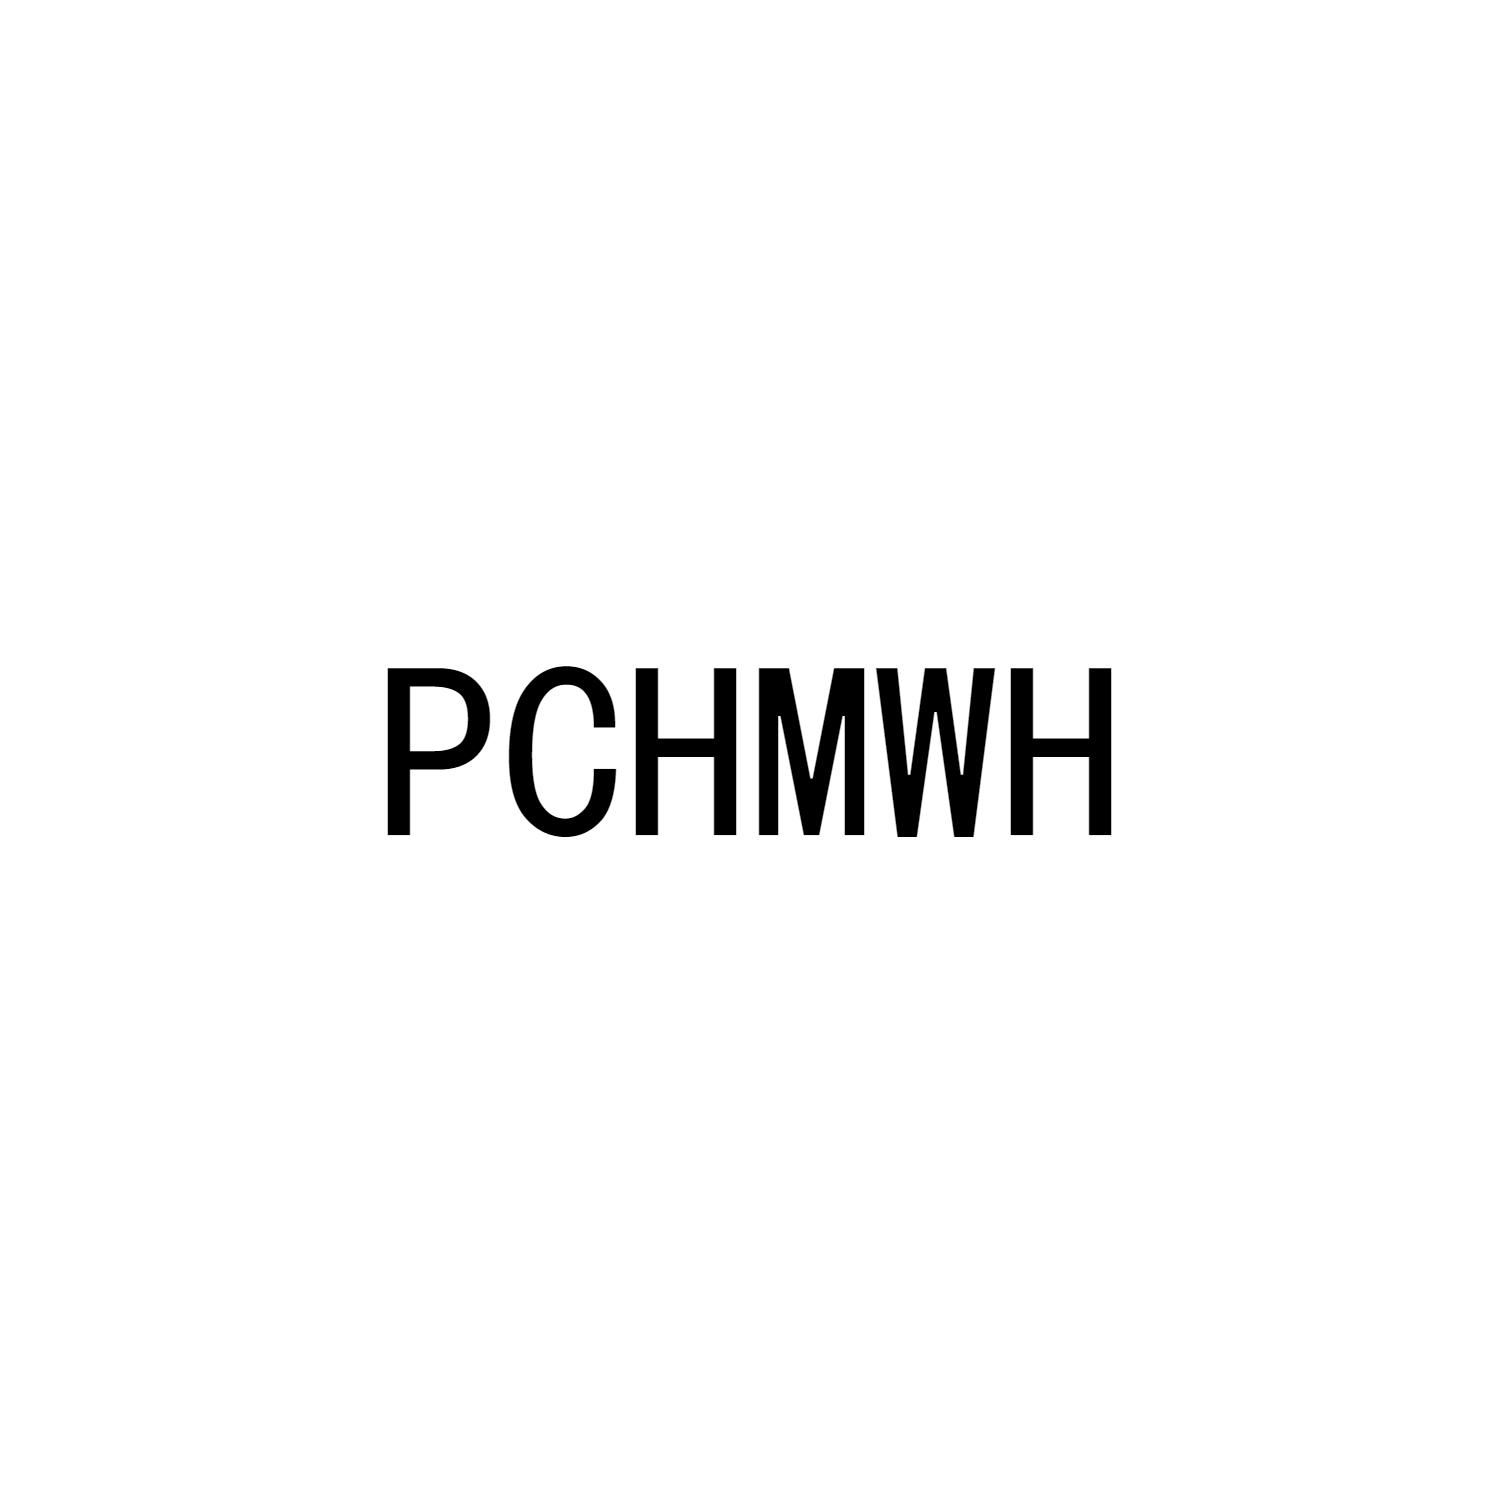 PCHMWH